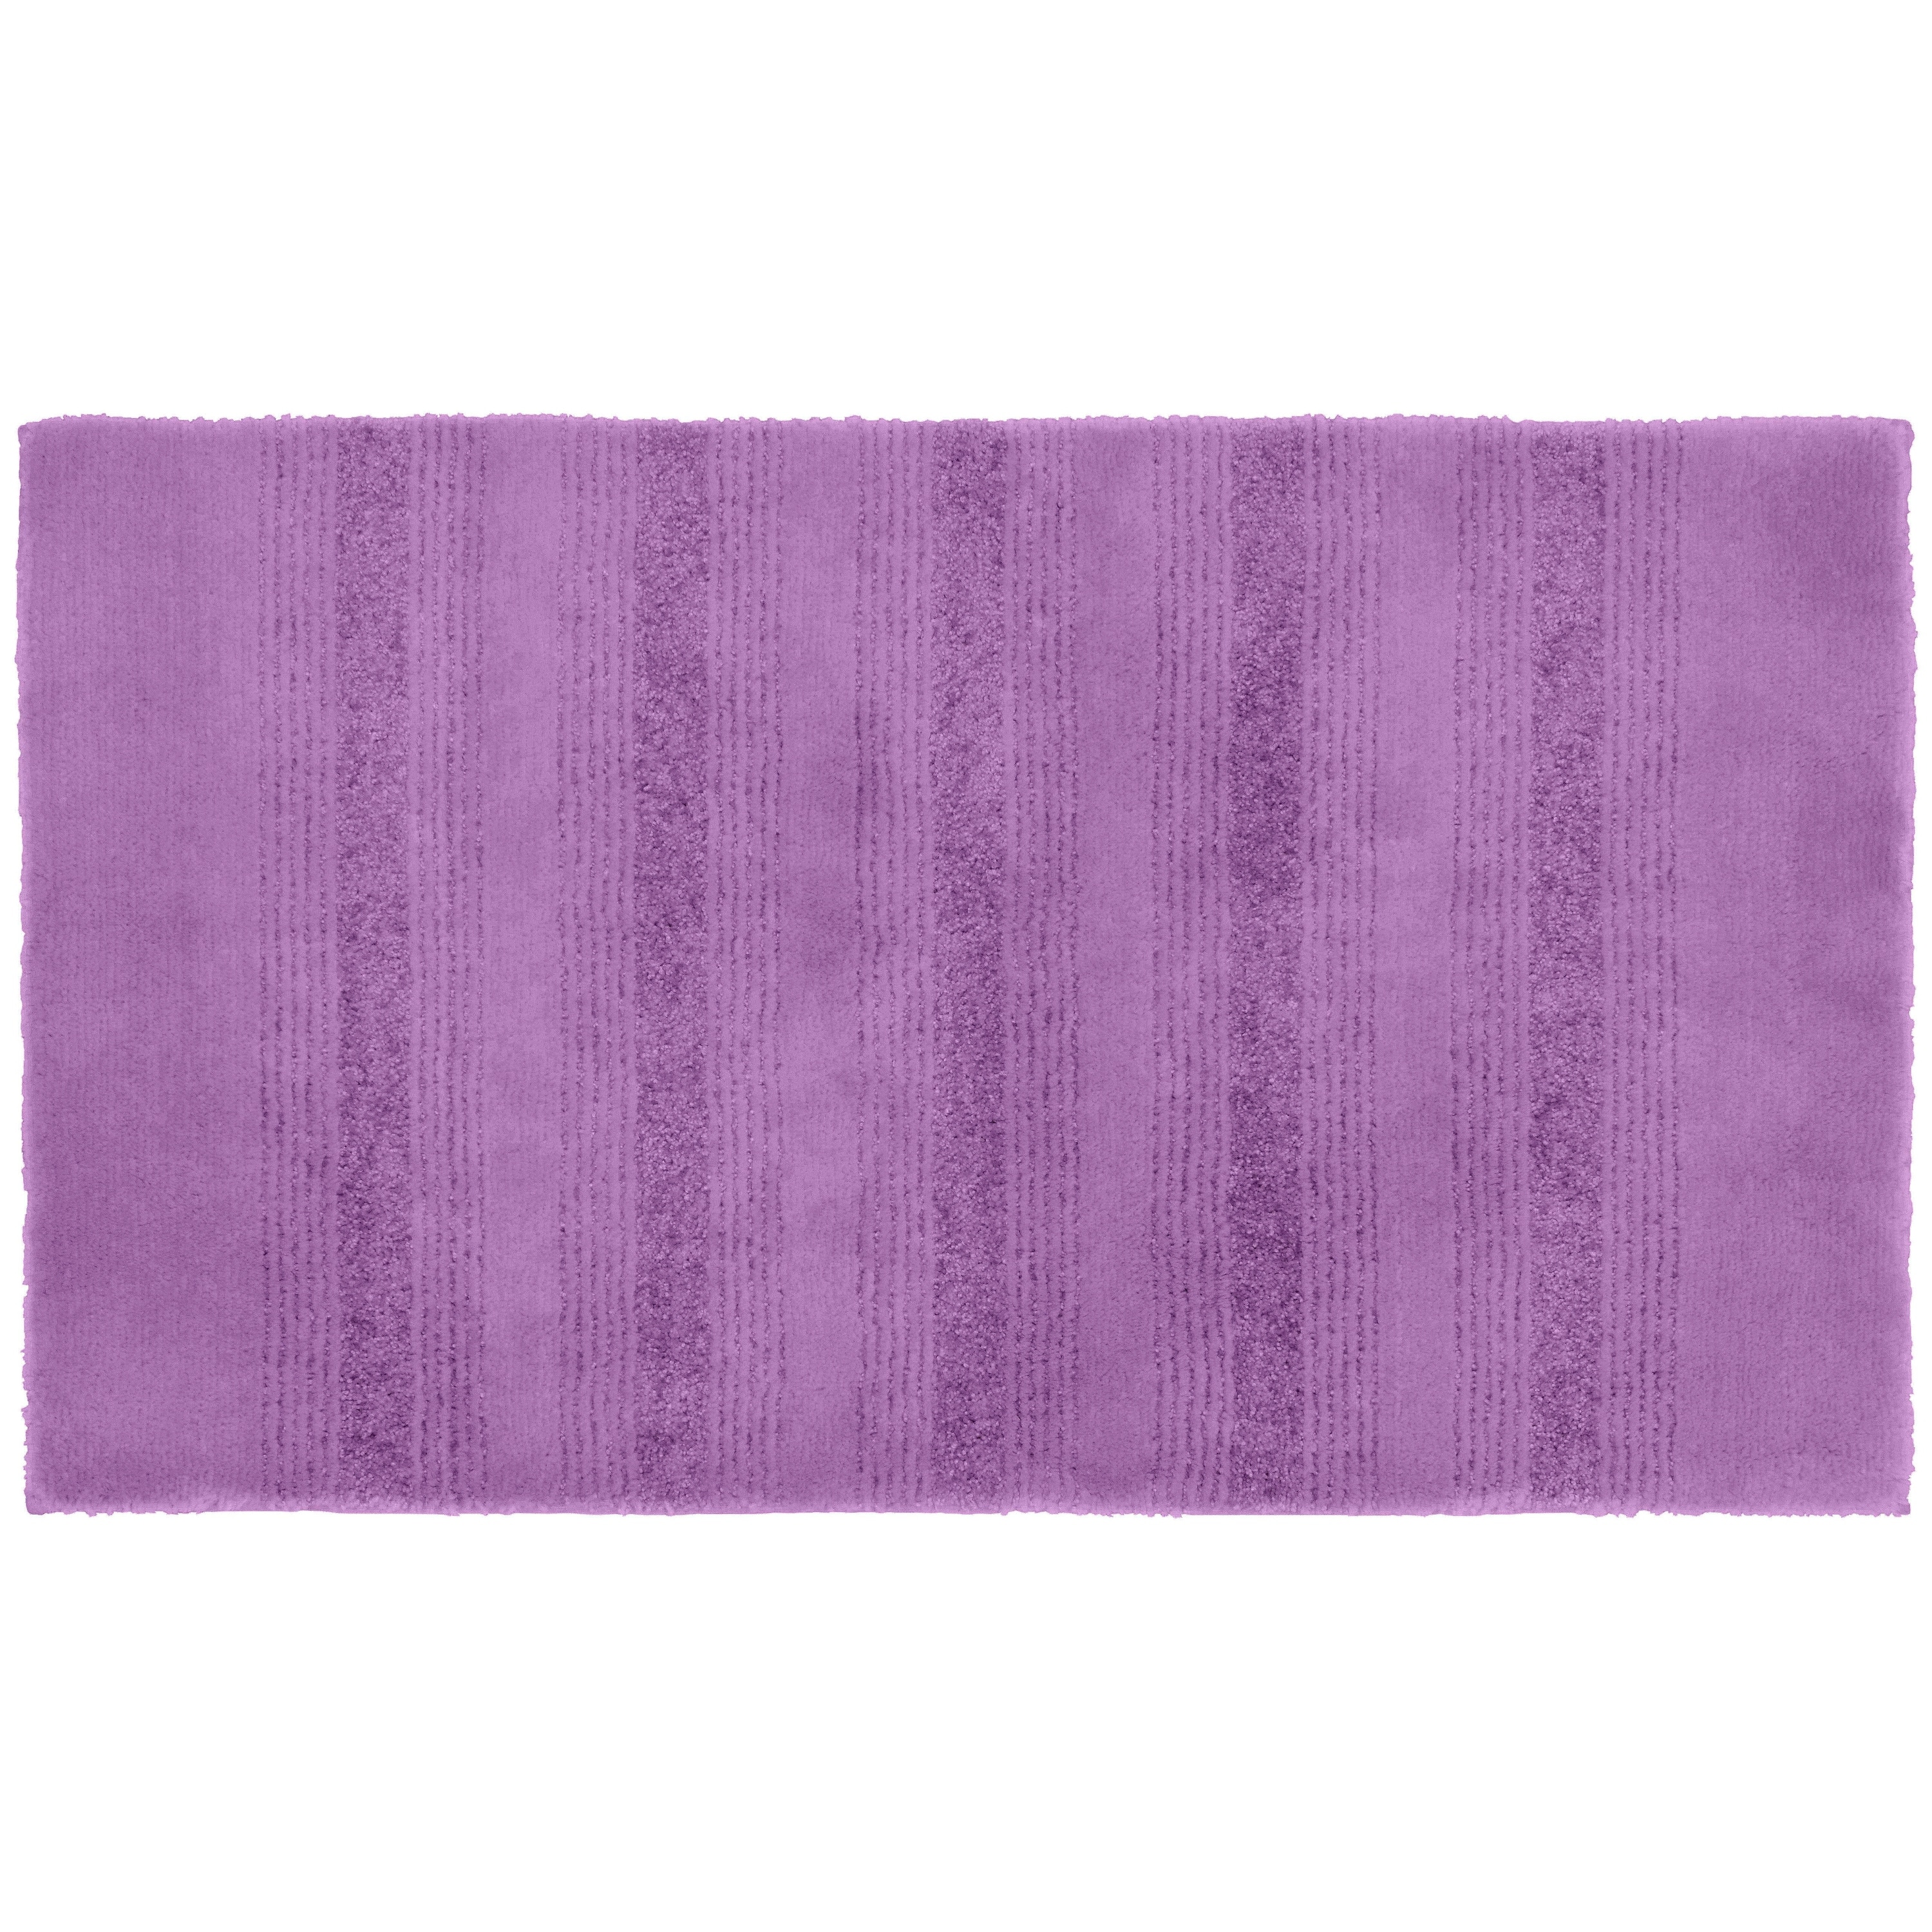 Garland Rug Traditional Plush Washable Nylon Rug Purple 30-Inch by 50-Inch 